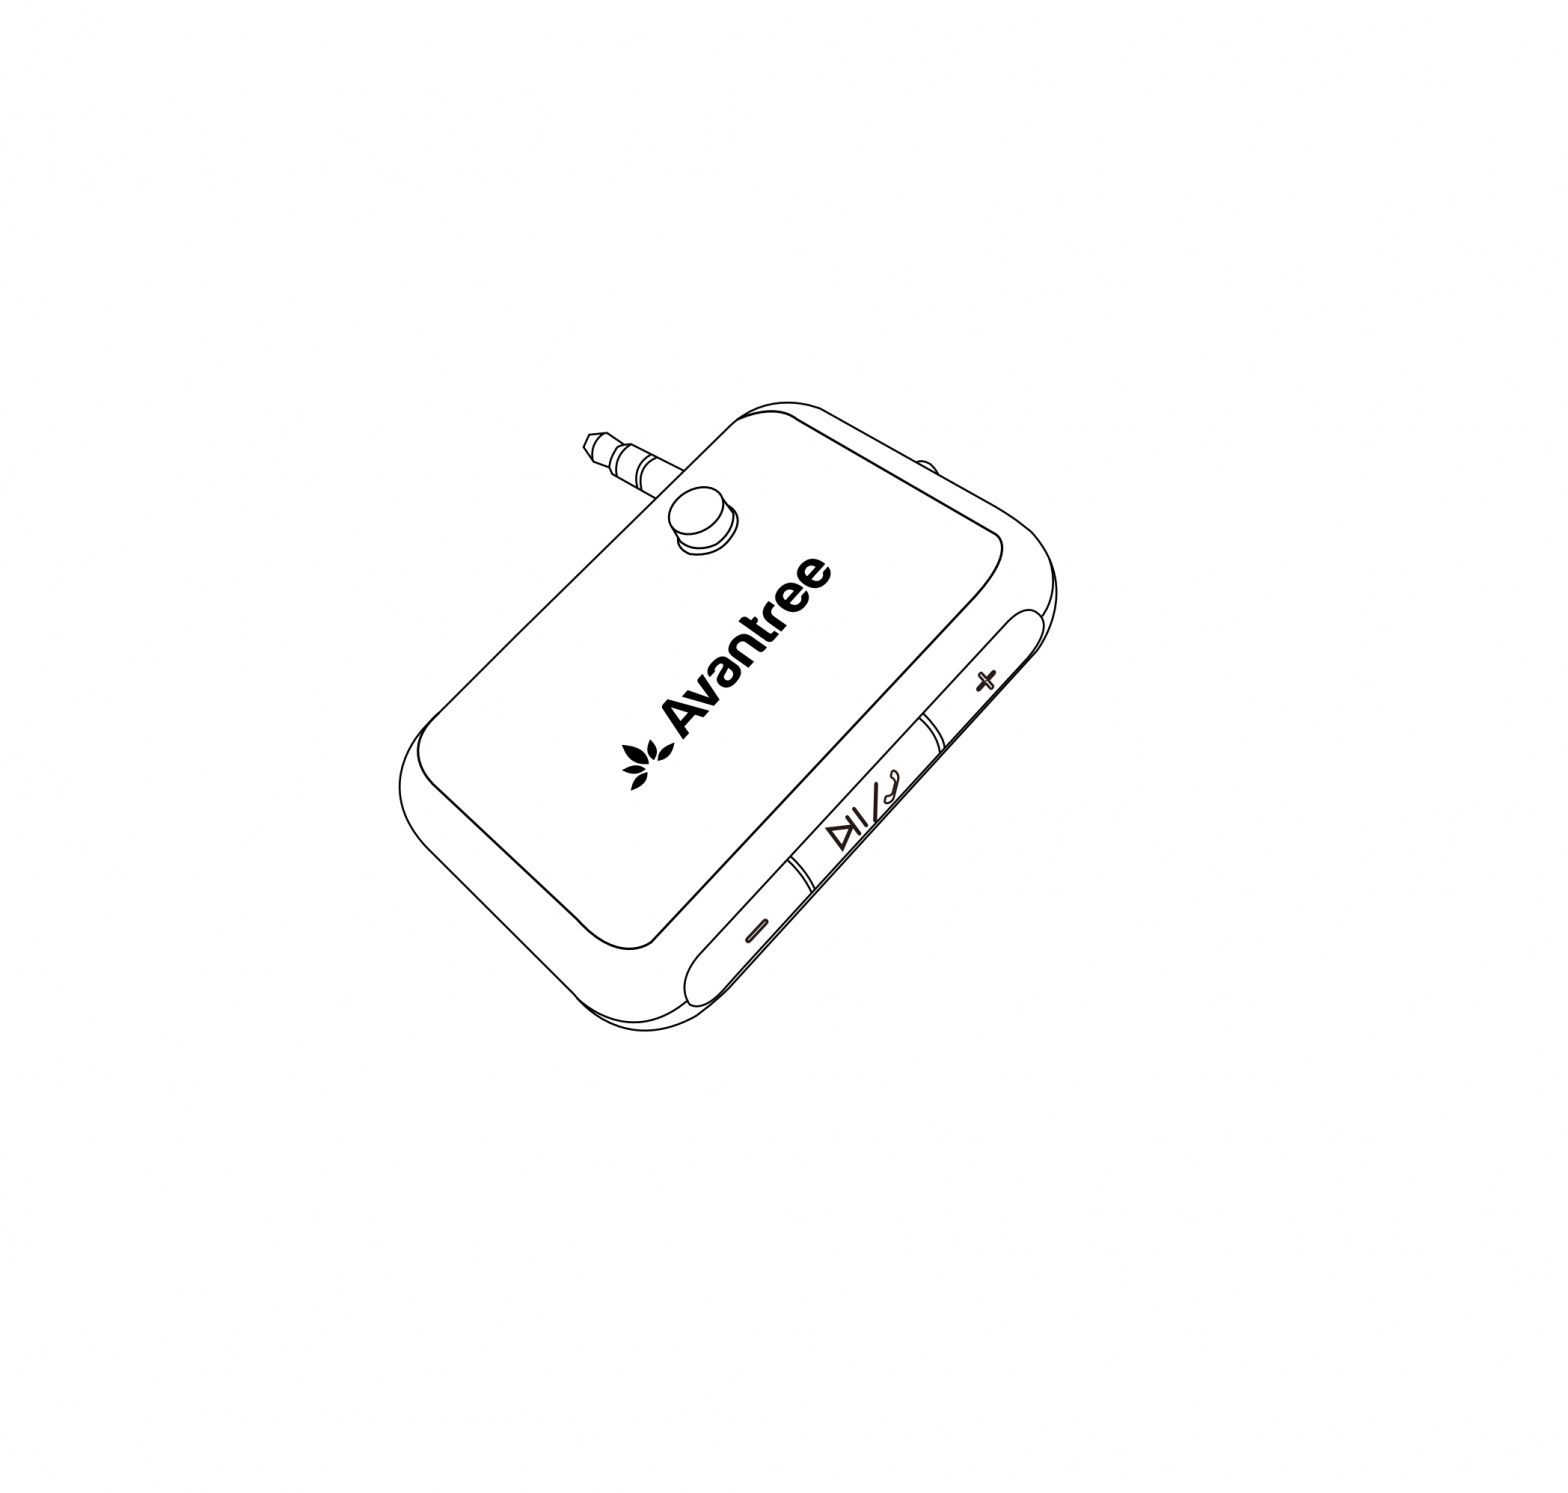 Avantree Portable Wireless Car Kit User Manual